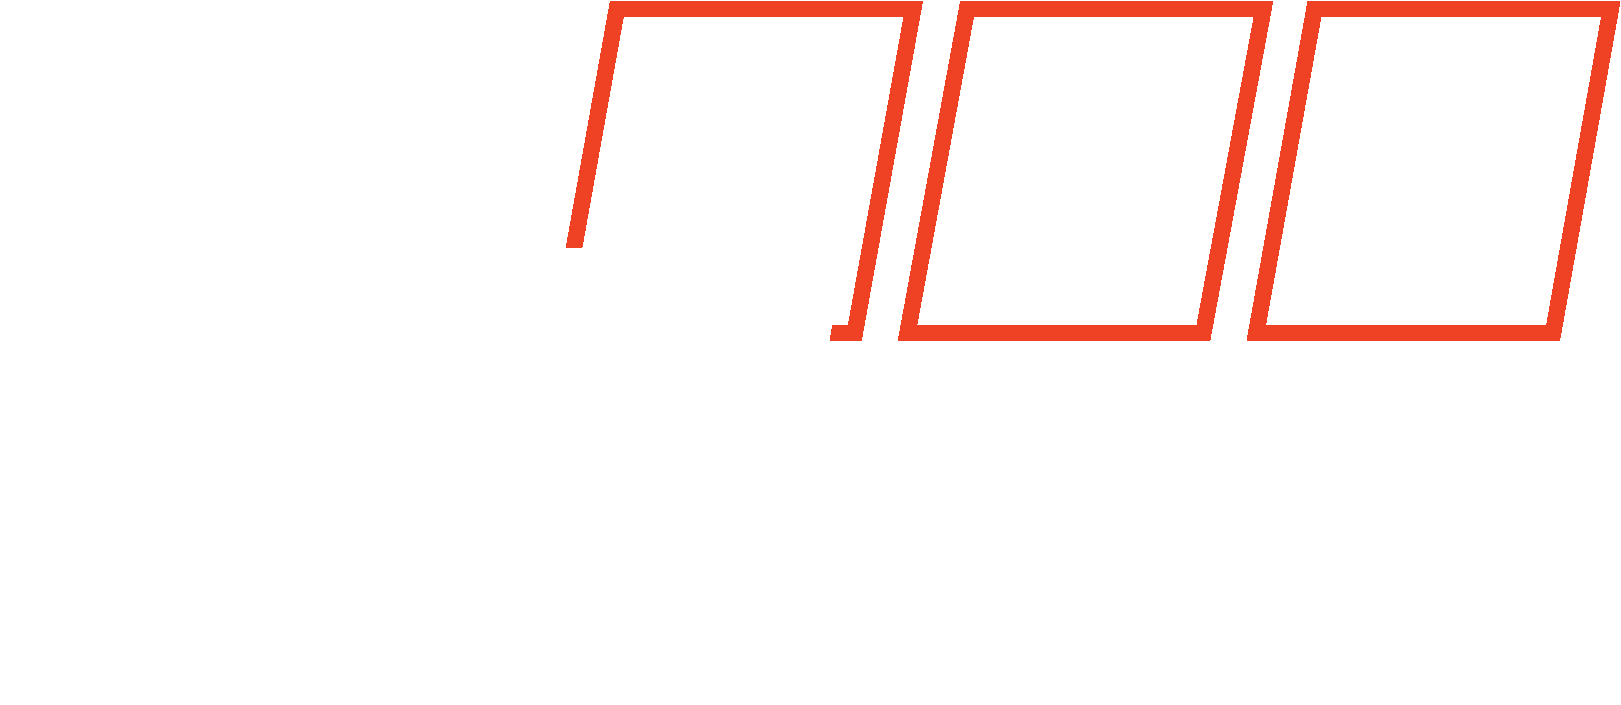 Erdbau Thalheim GmbH